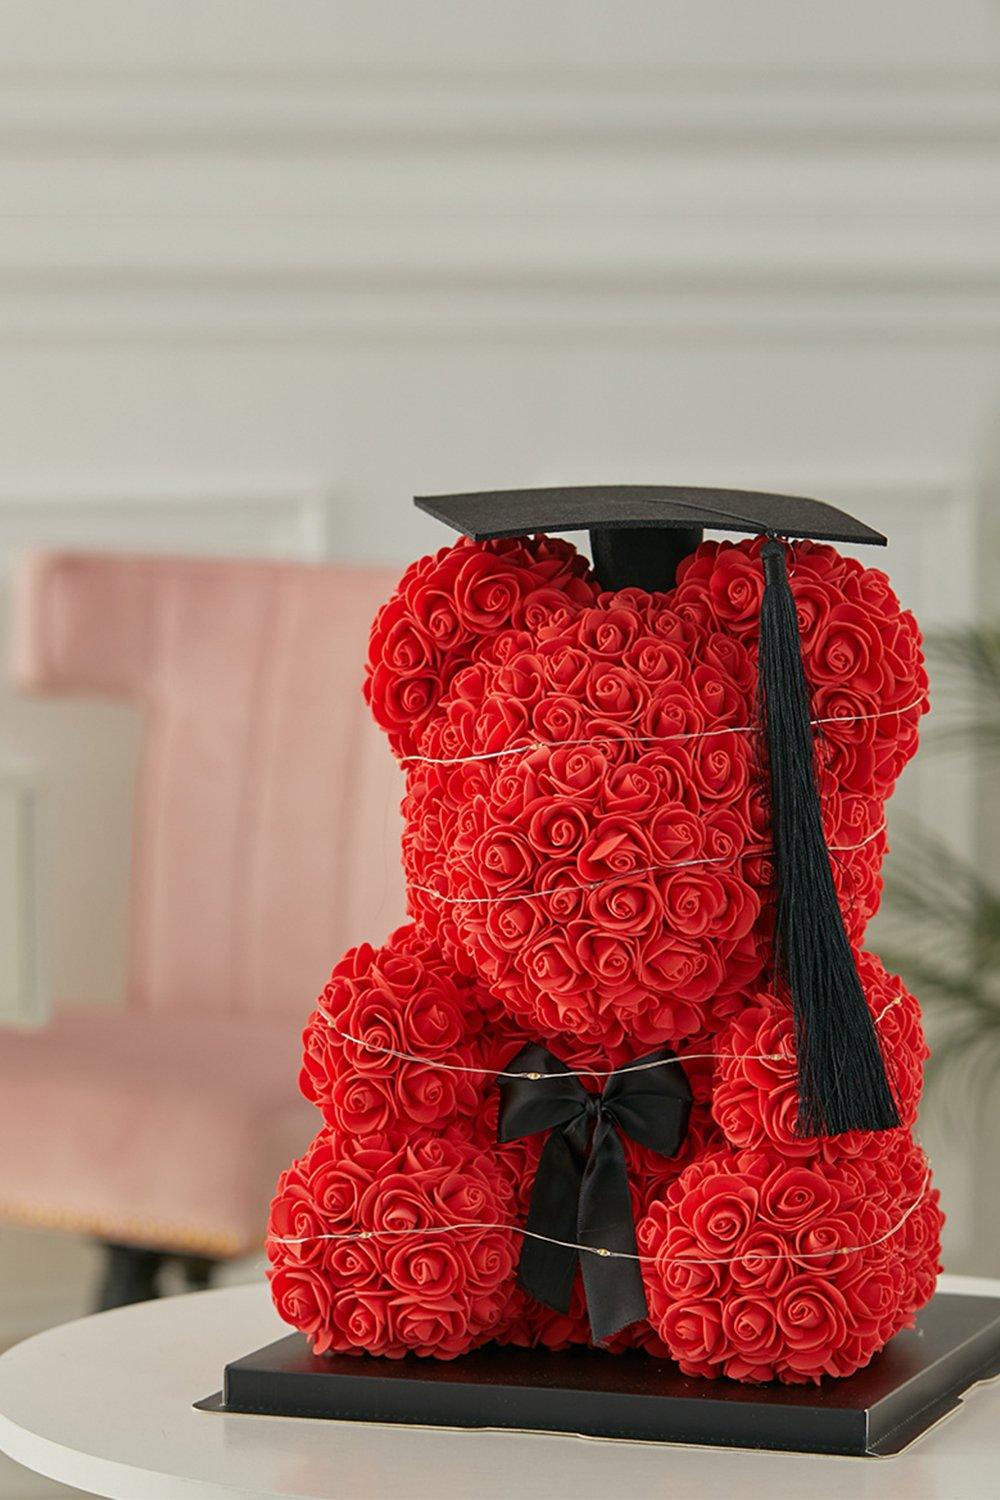 Valentine's Day Gift Rose Teddy Bear